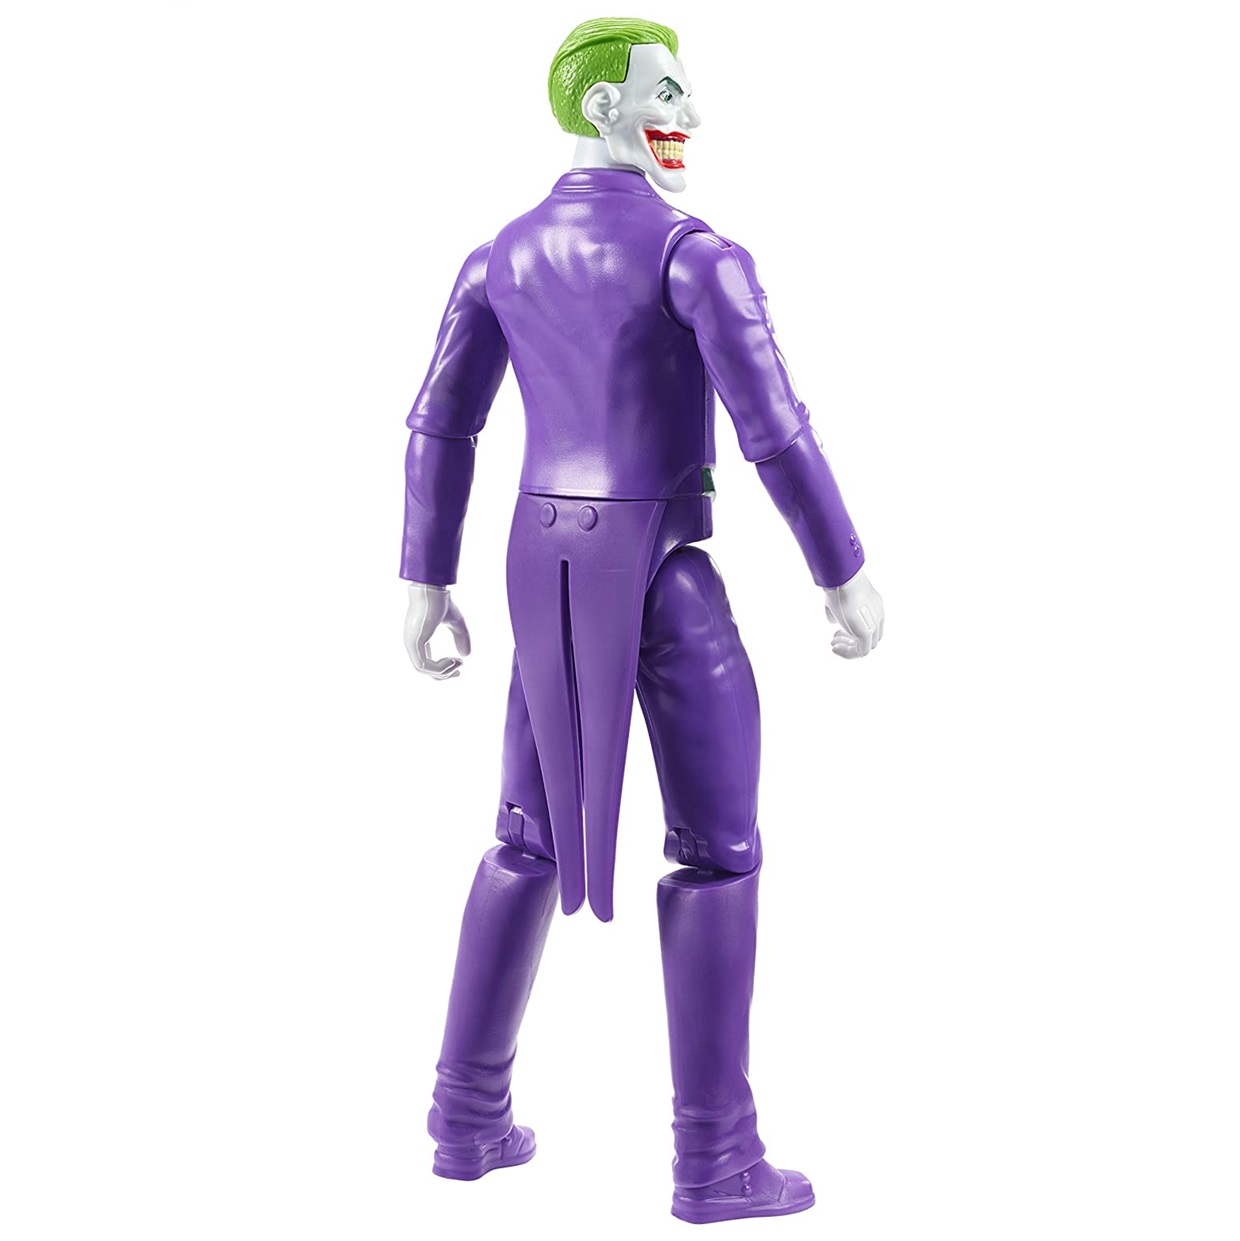 The Joker Clown Prince Figura Batman Missions True Moves  12 Pulg